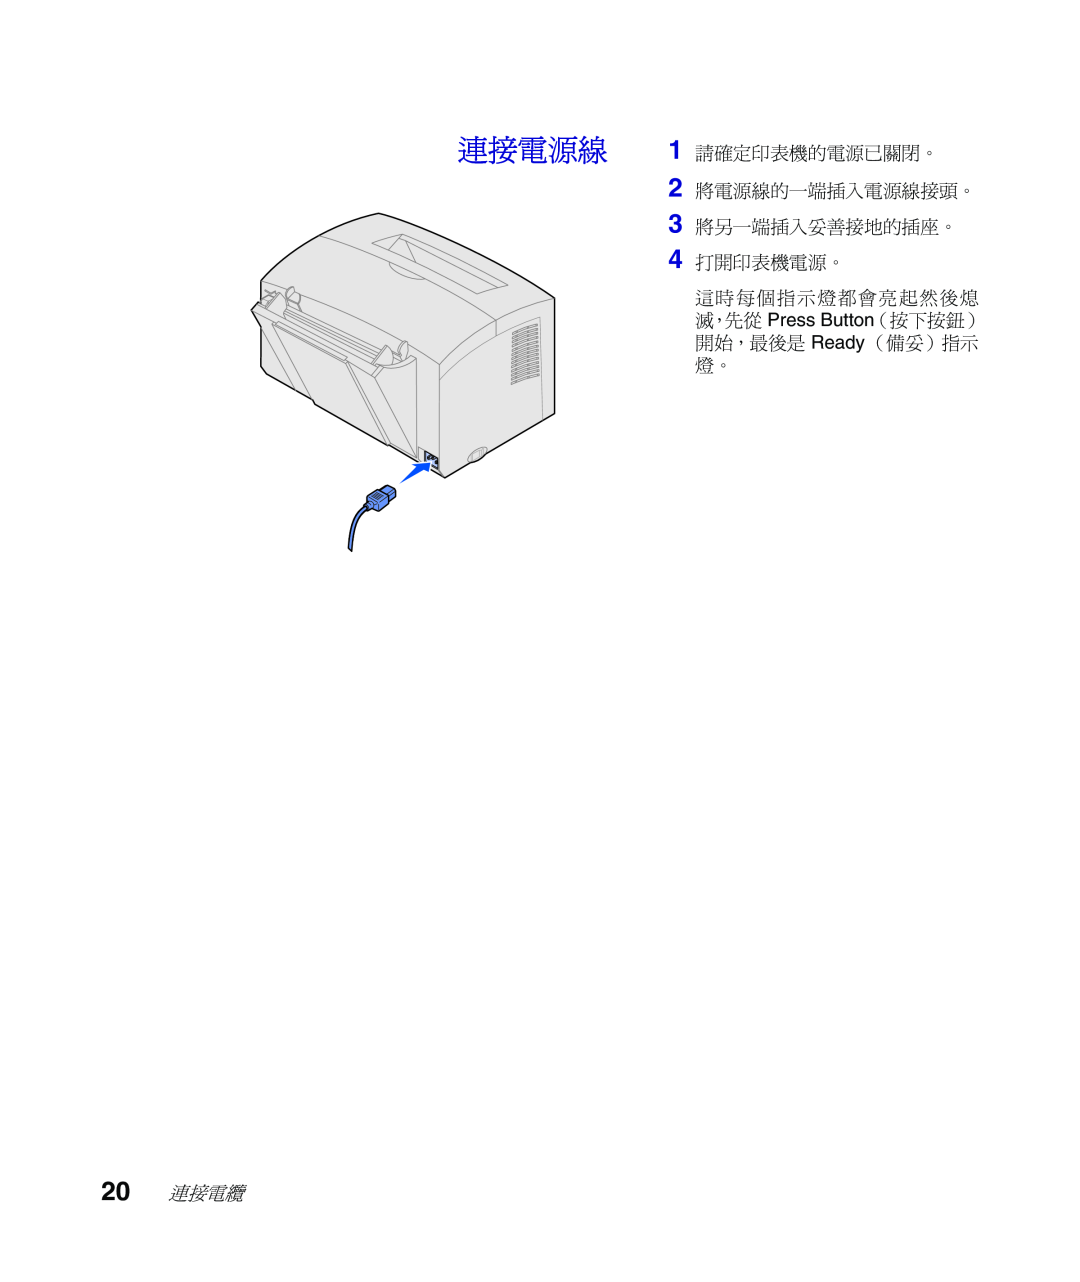 Lexmark Infoprint 1116 setup guide 連接電源線, 請確定印表機的電源已關閉。 將電源線的一端插入電源線接頭。 將另一端插入妥善接地的插座。 打開印表機電源。, 20 連接電纜 